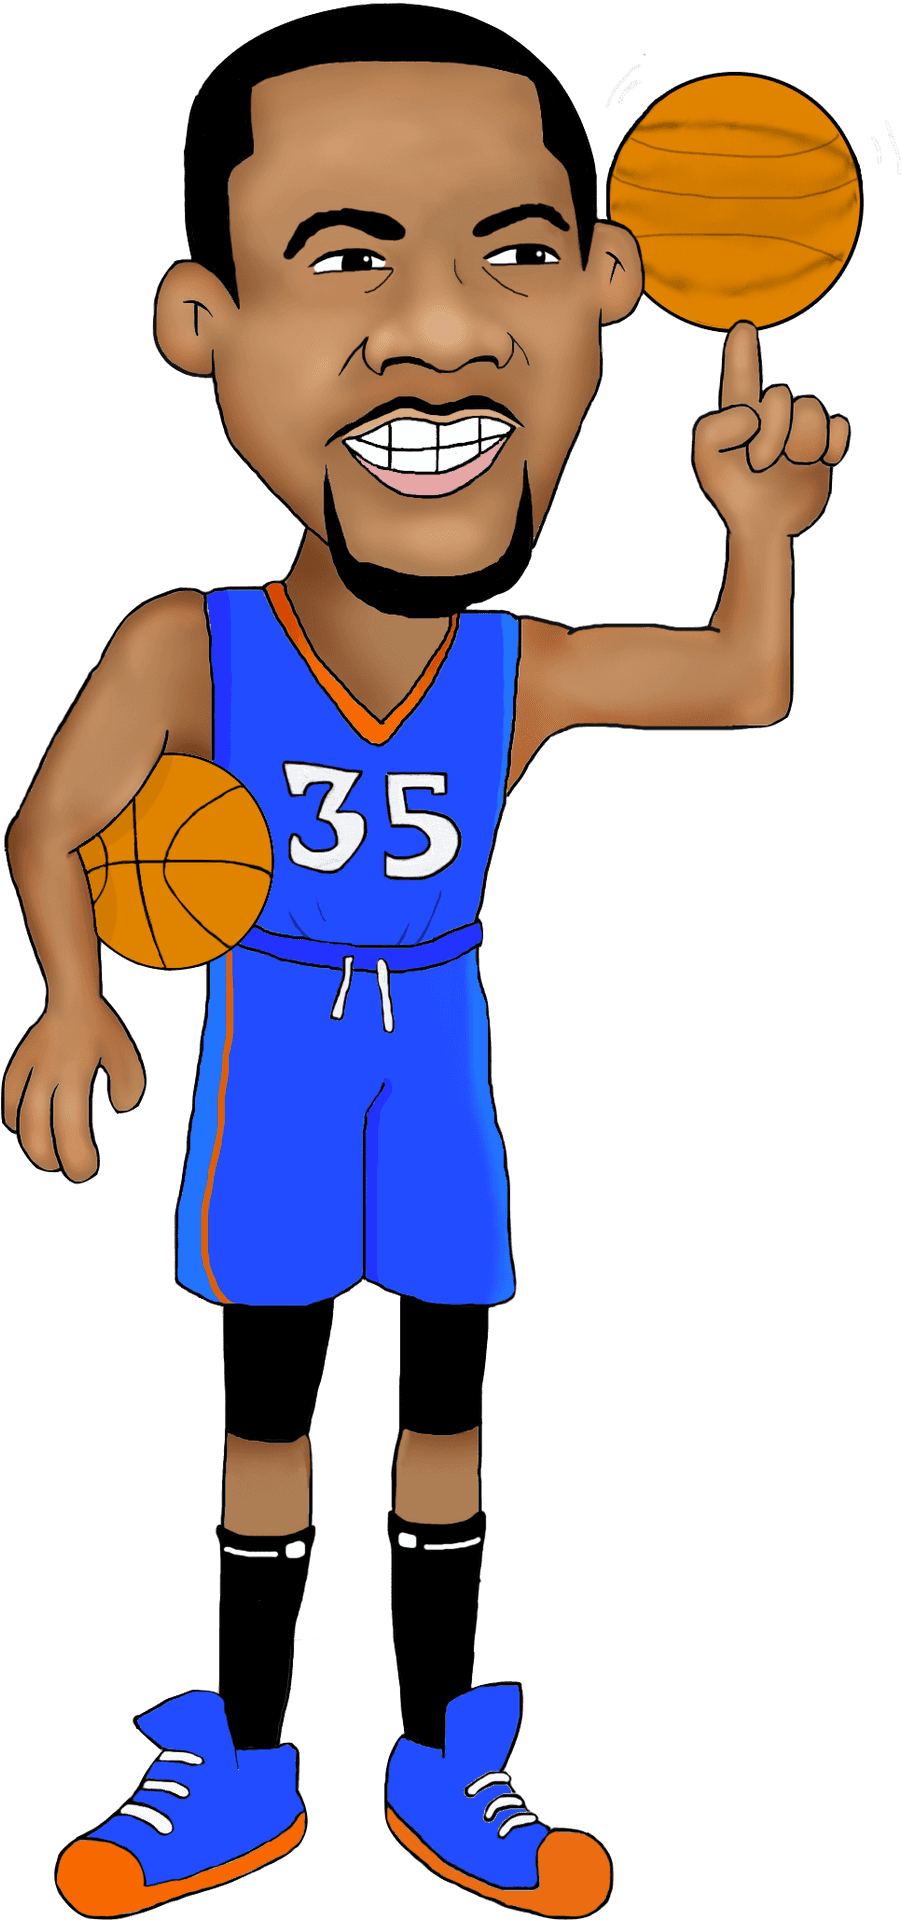 Basketball Player Cartoon Spinning Ball.png PNG